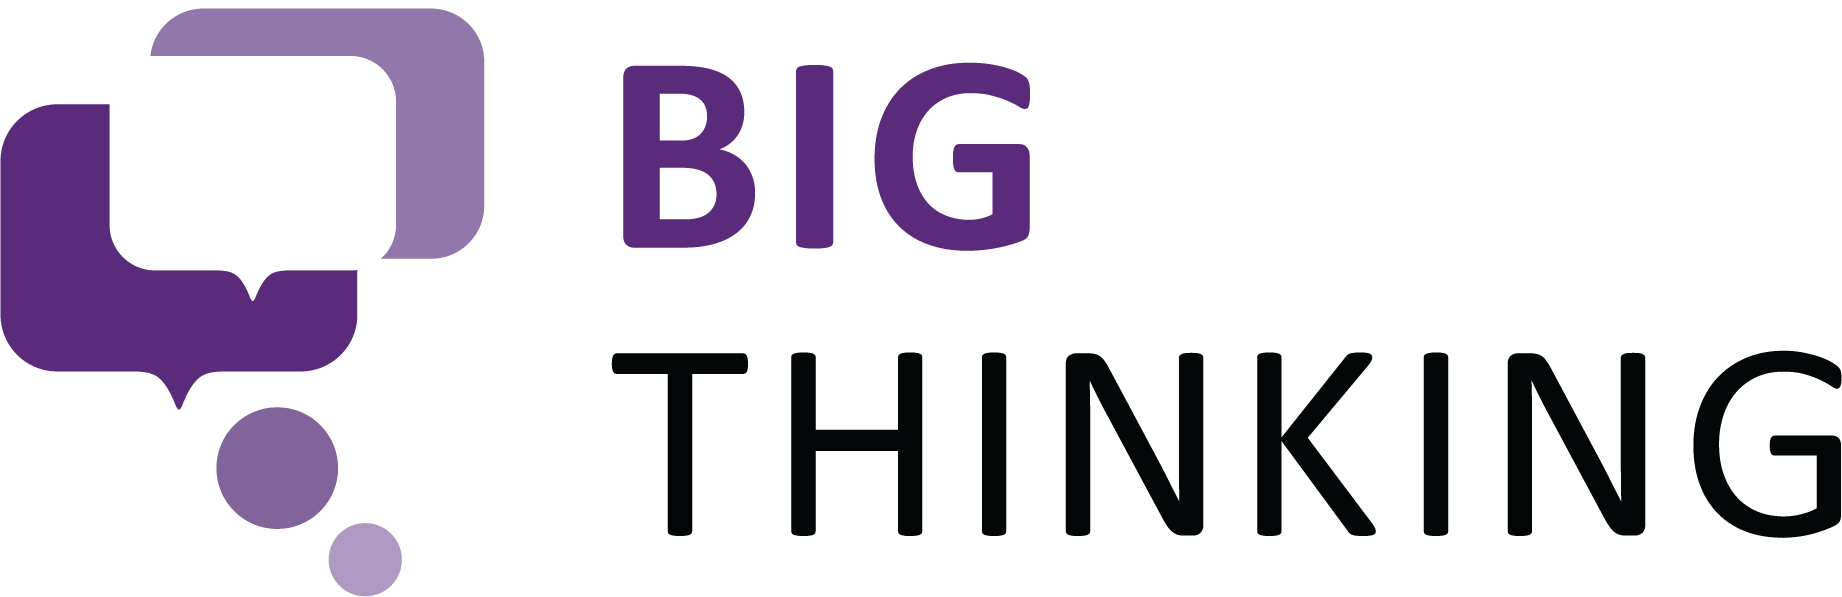 Big thinking logo